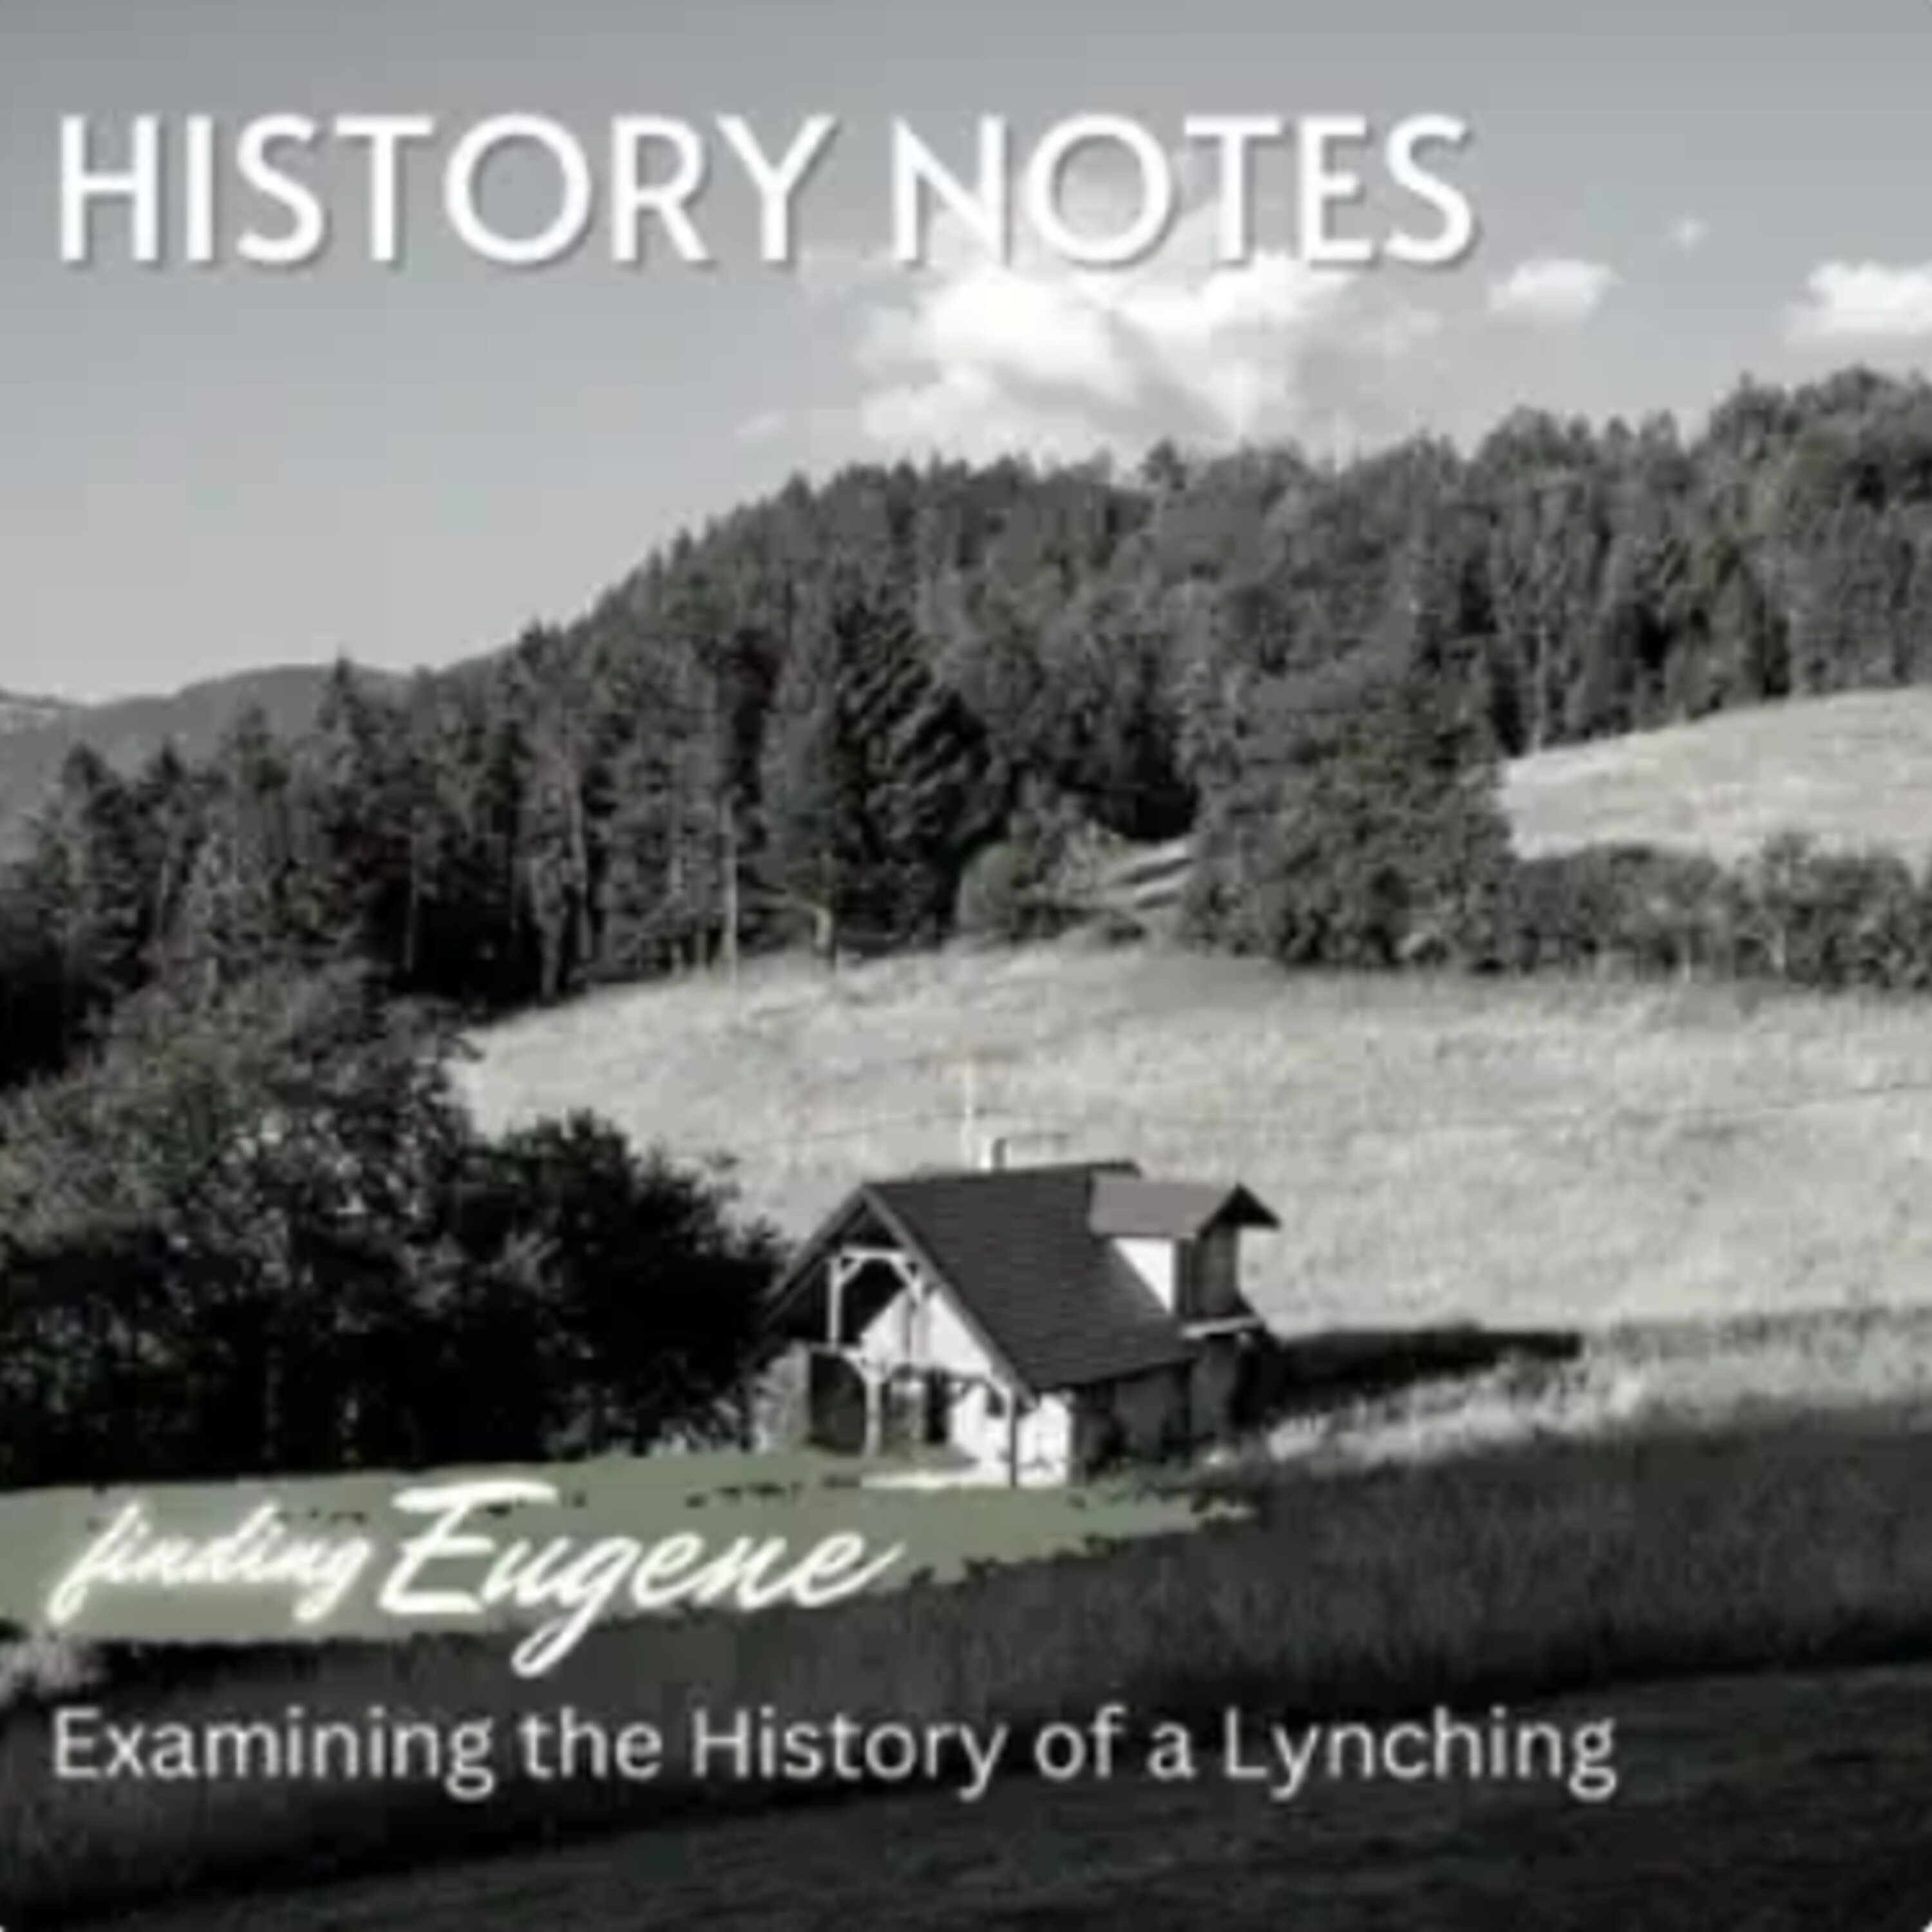 History Notes Podcast - Finding Eugene Image